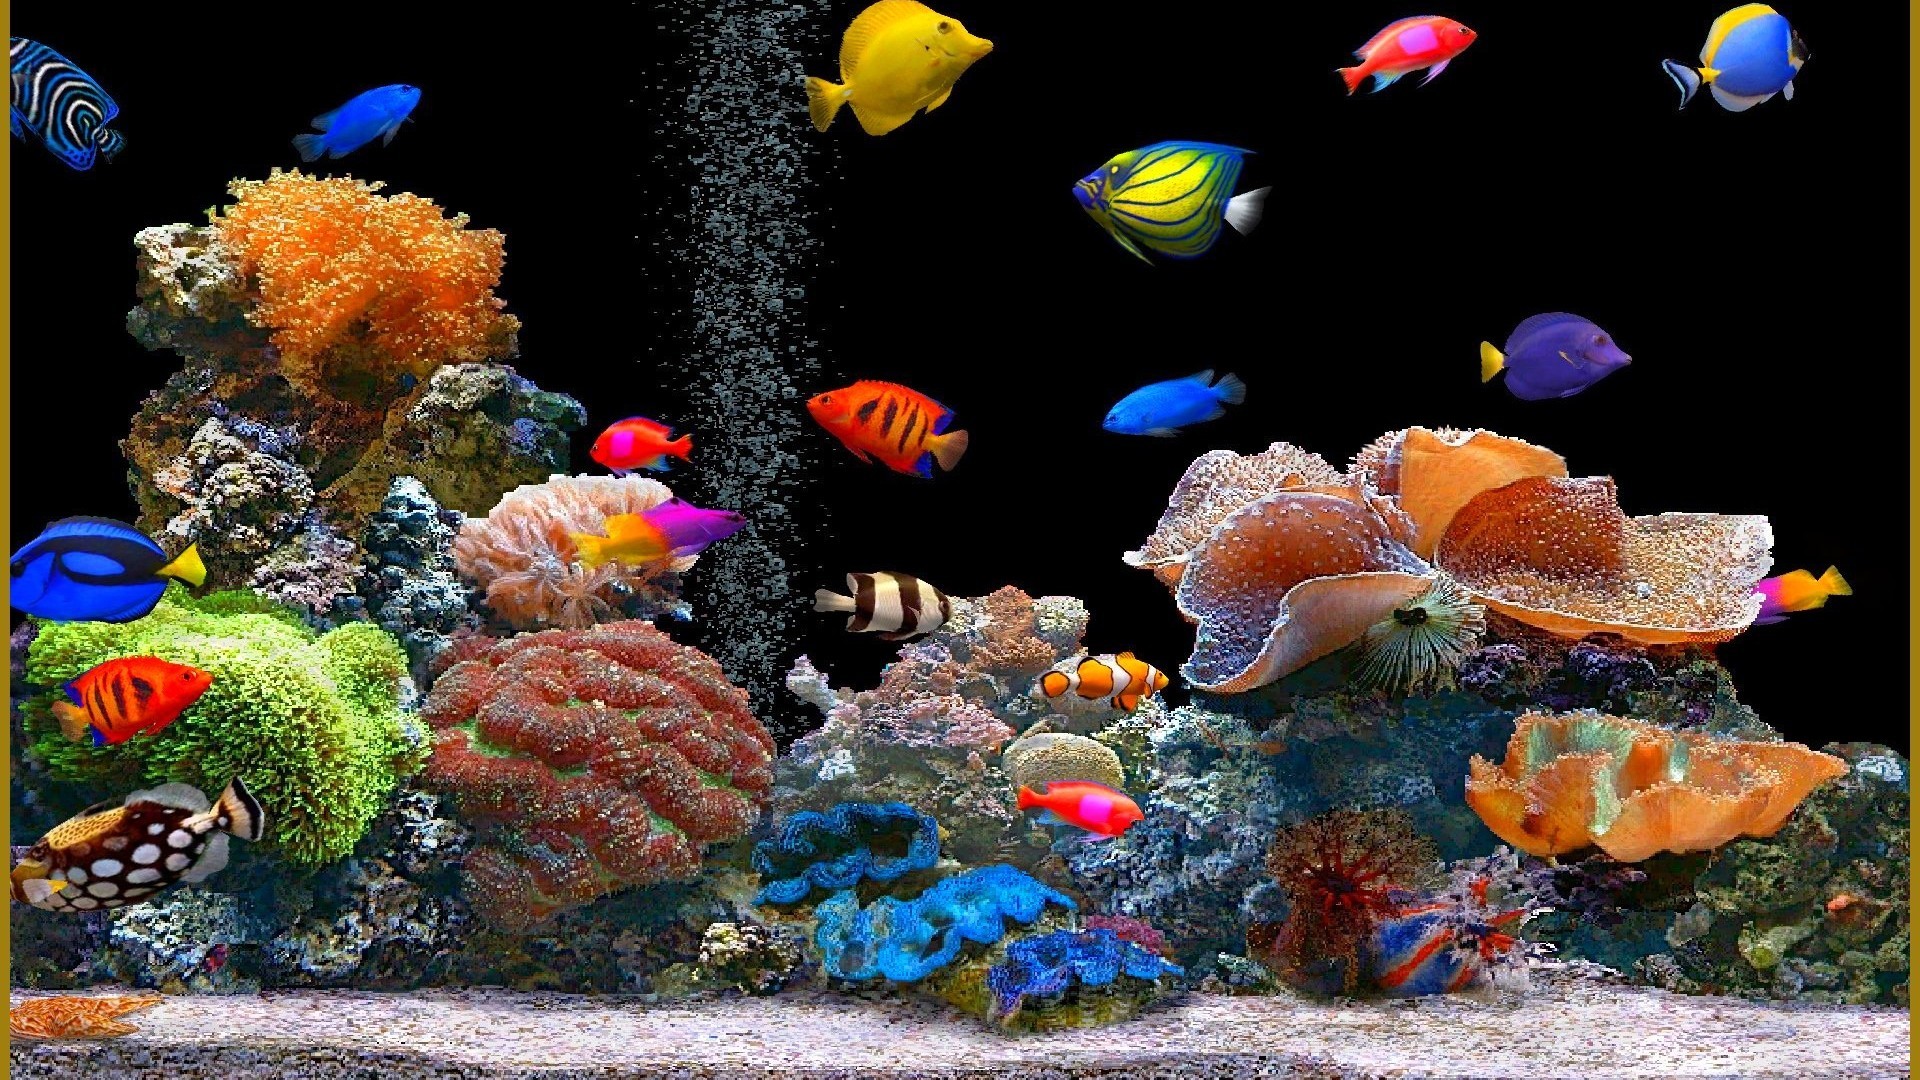 Animated Desktop Wallpaper Fish for Windows 8.1 | All for Windows 10 .